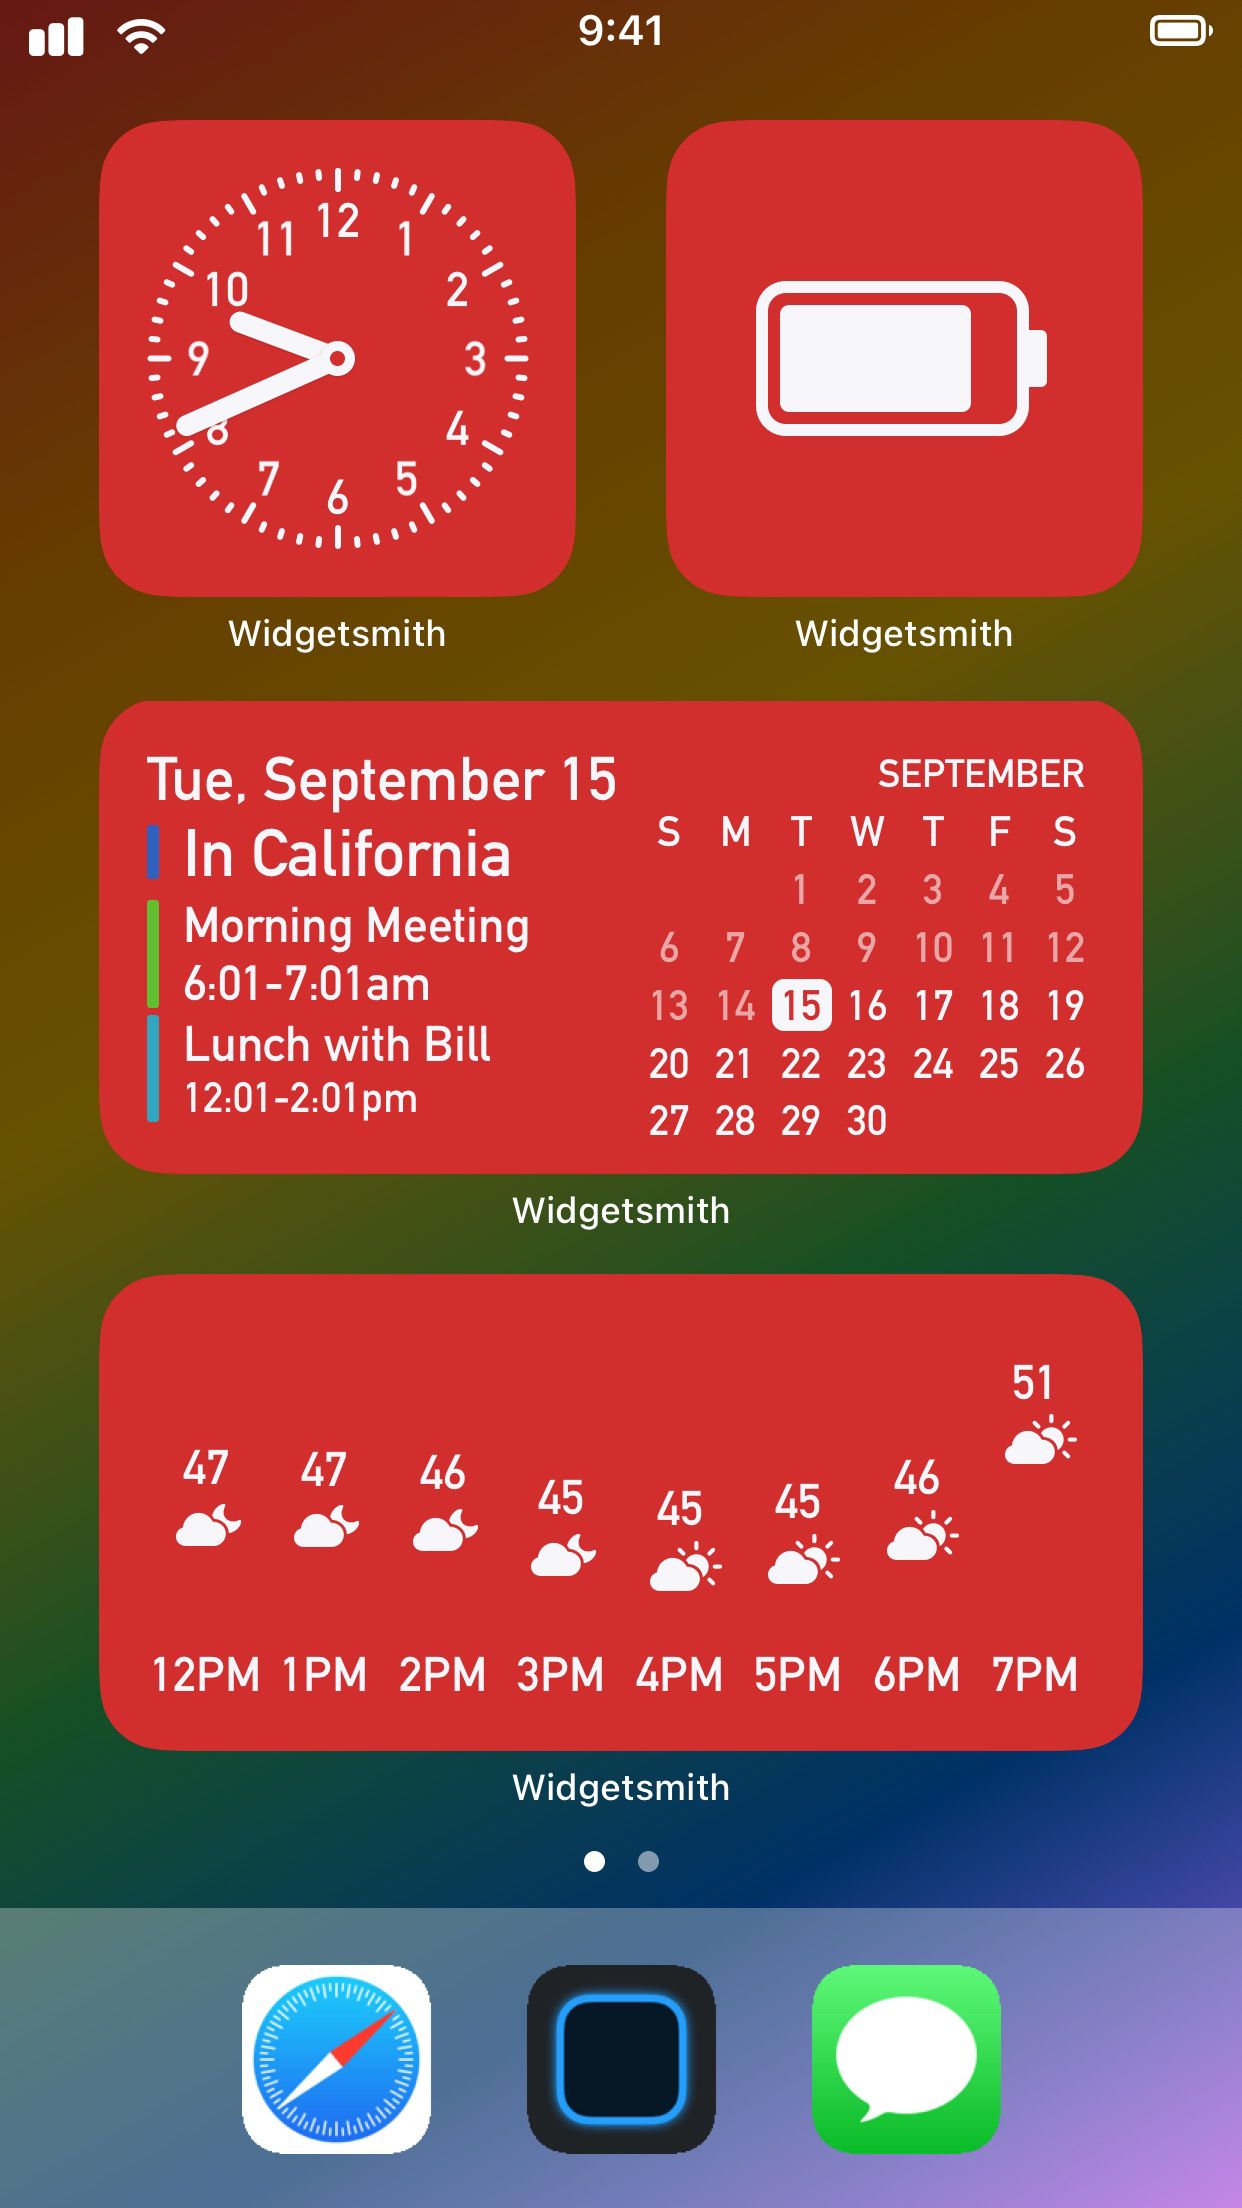 Widgetsmith Calendar iPhone widget.